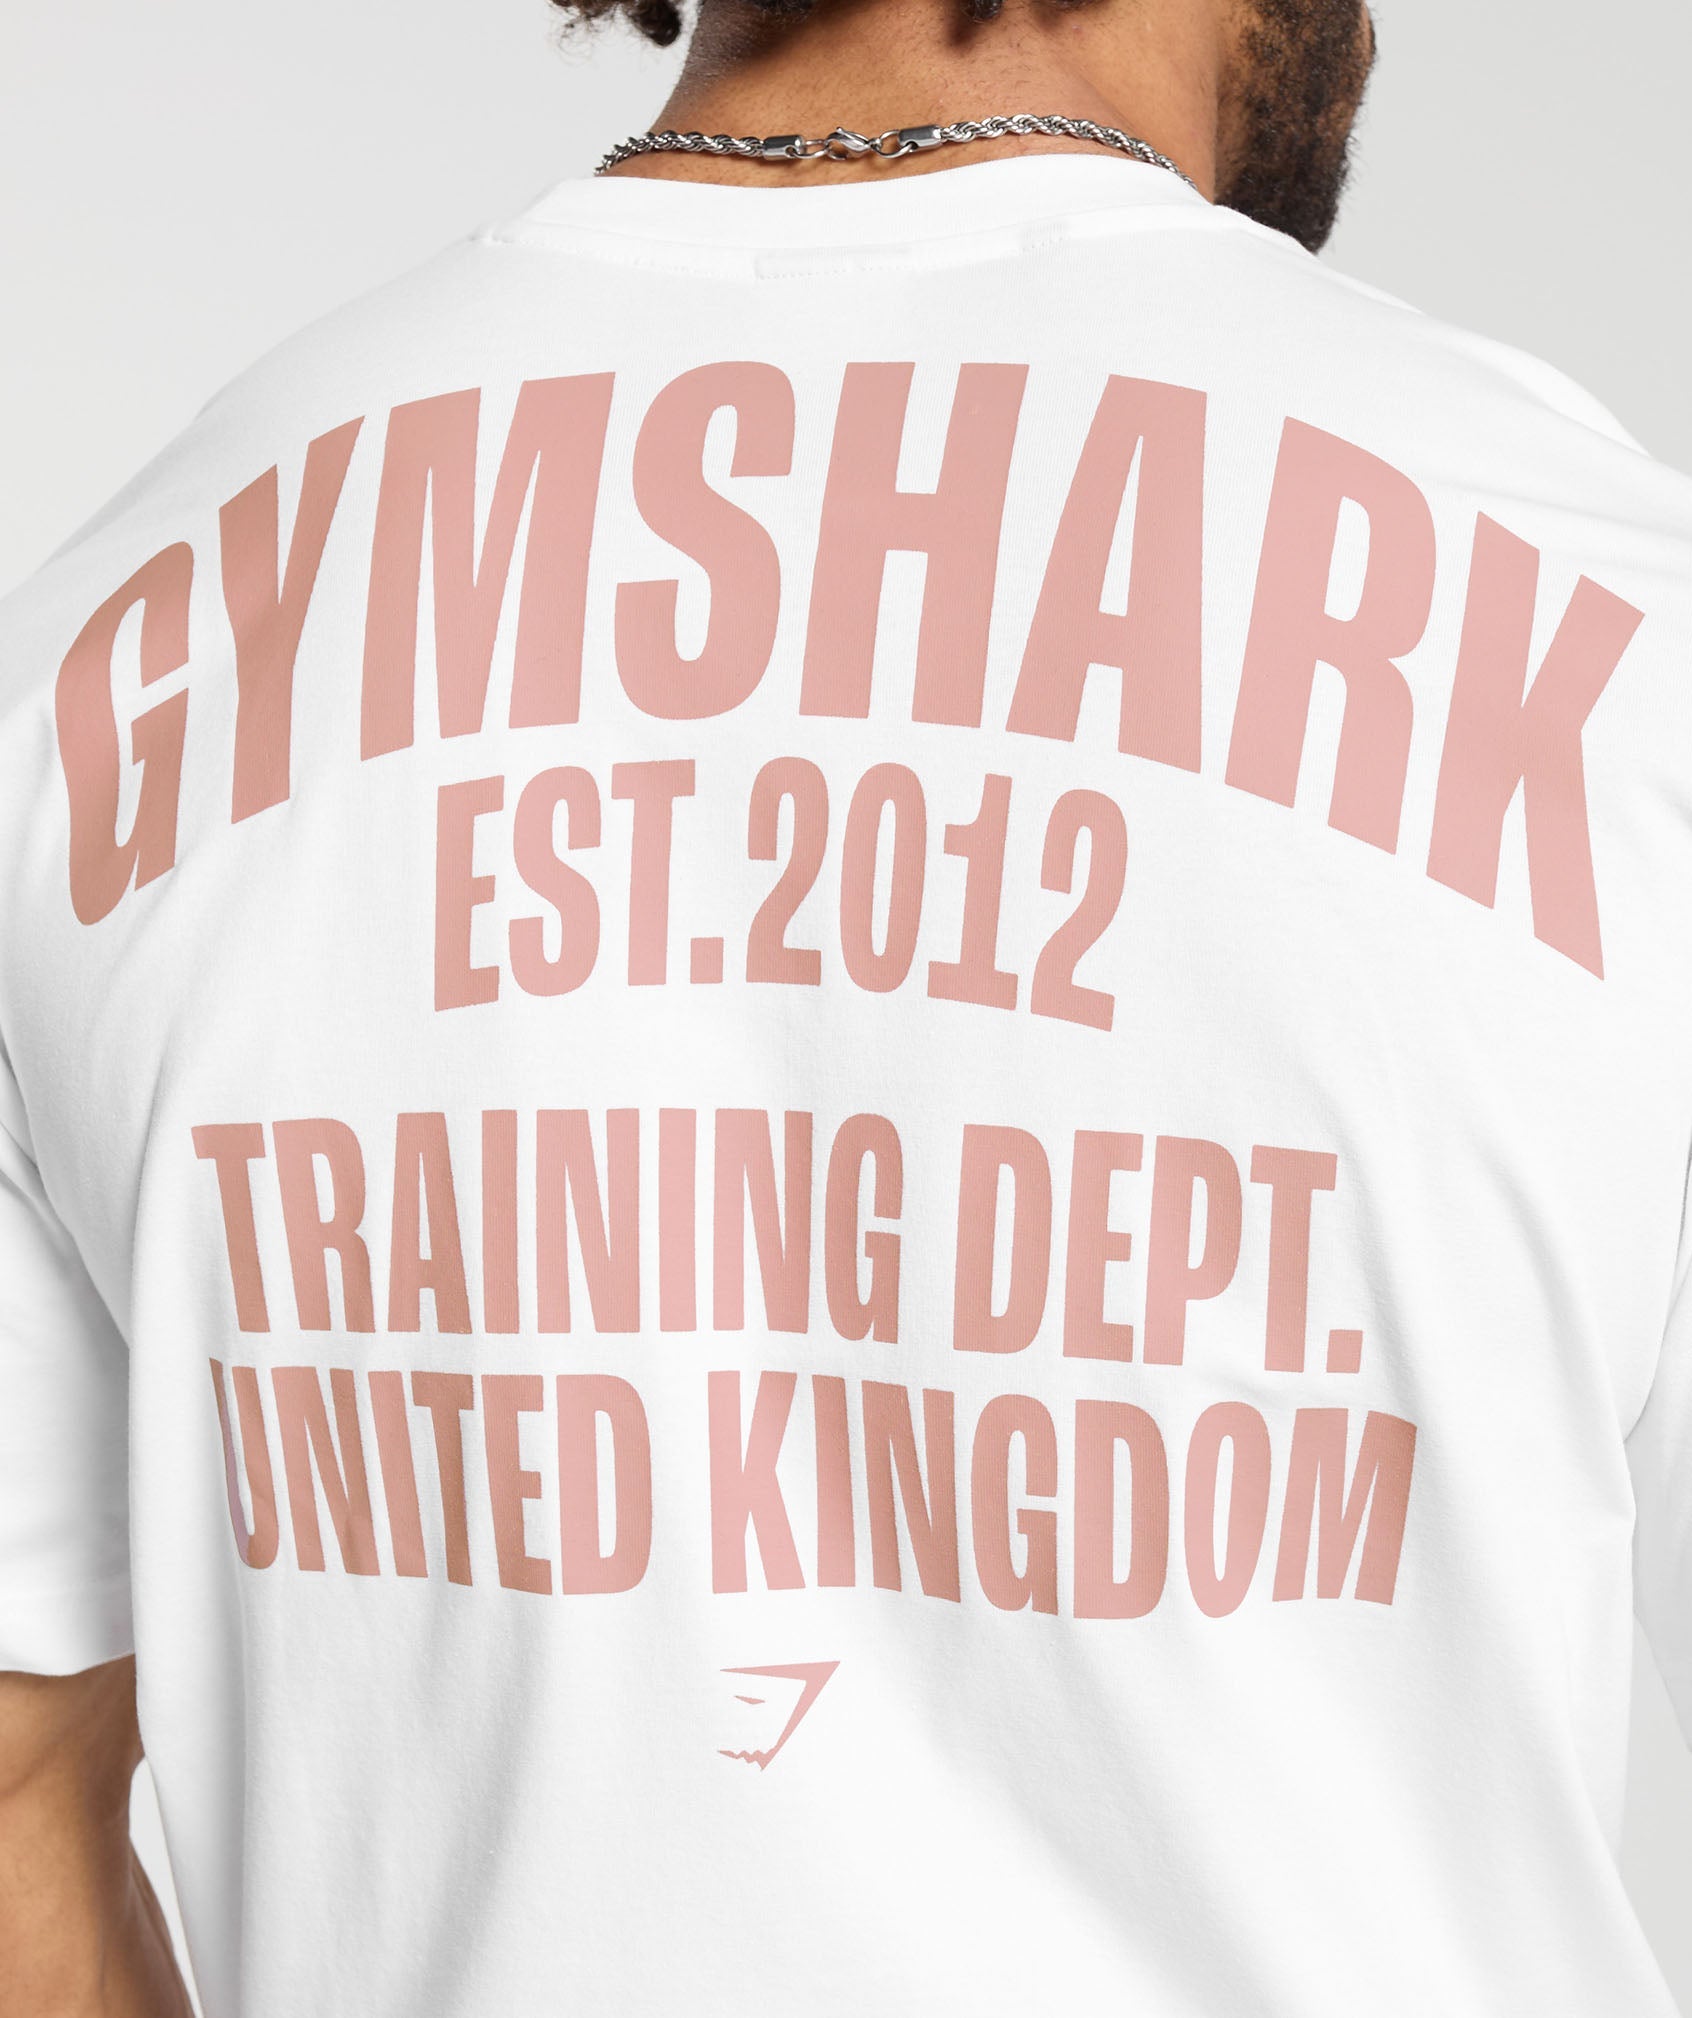 Training Dept. UK T-Shirt in White - view 7